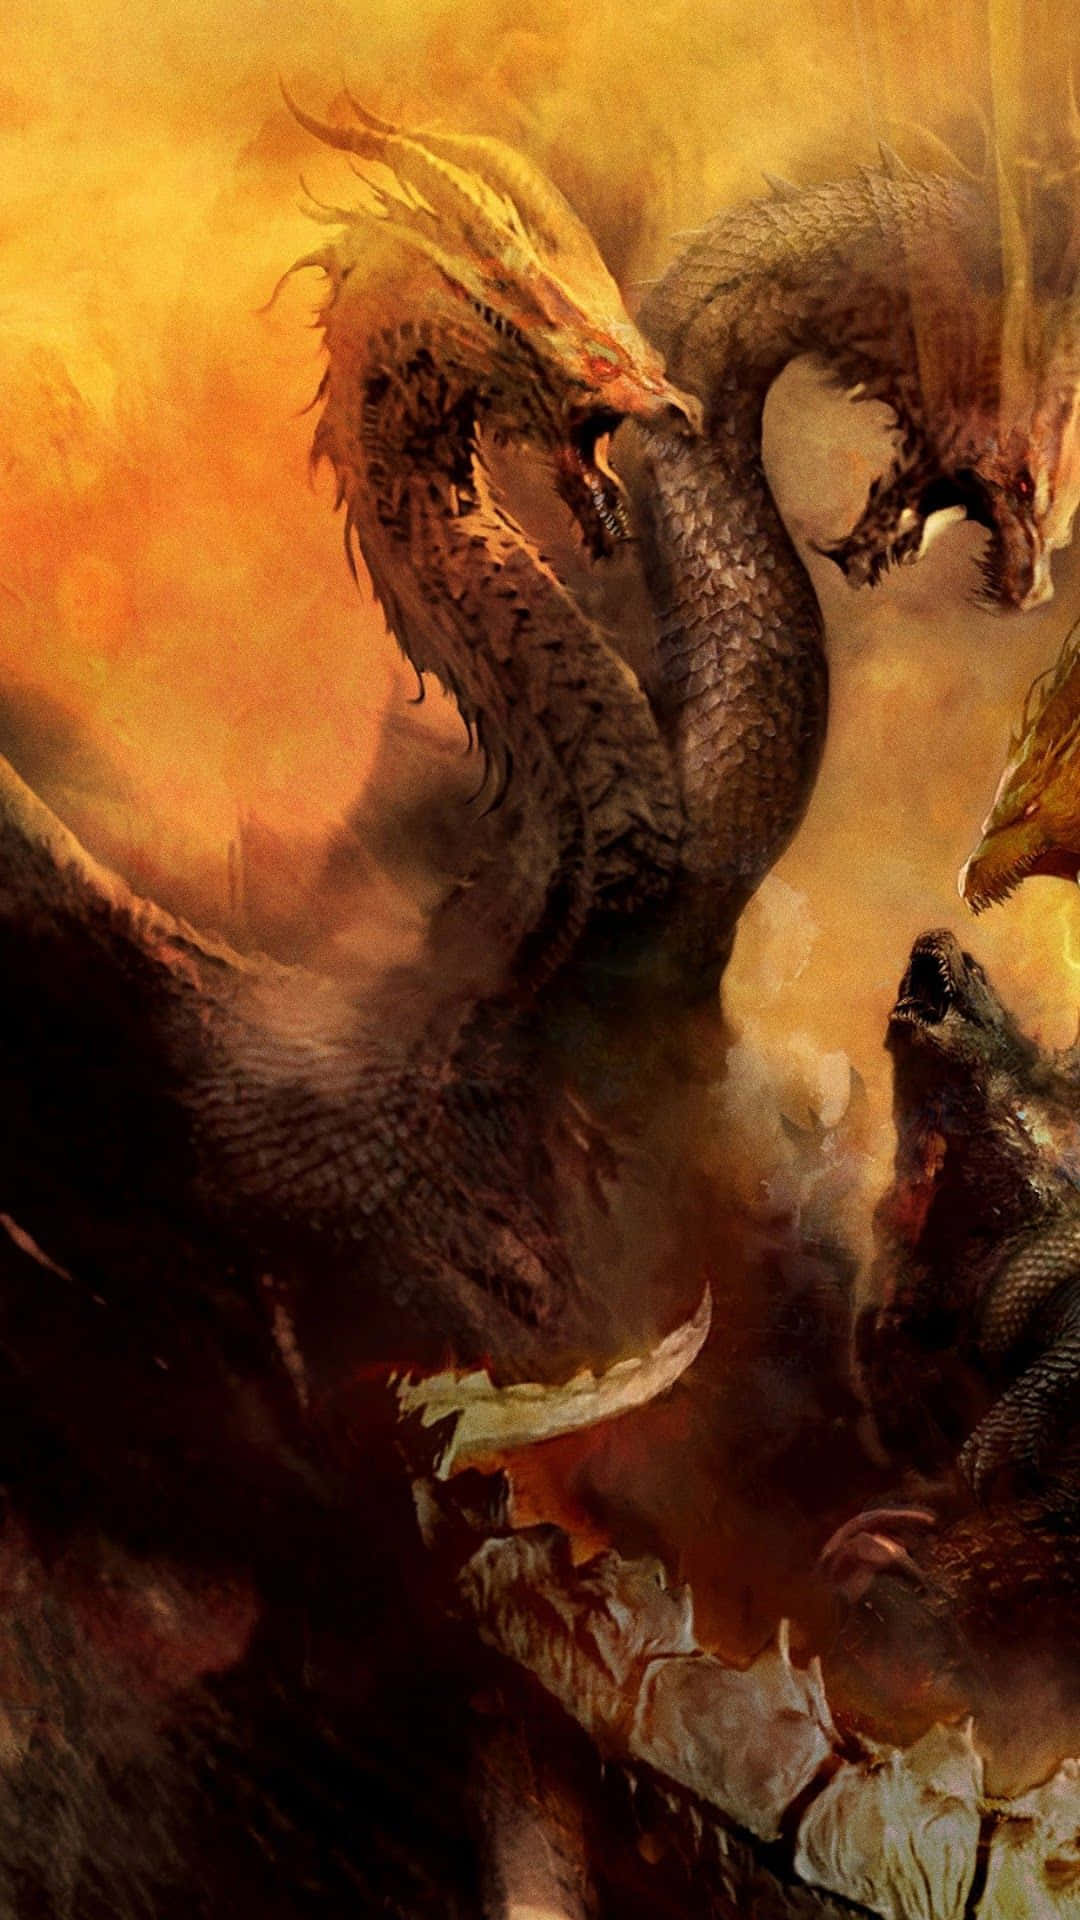 King Ghidorah: The Gravity-Defying Dragon from Godzilla Franchise Wallpaper